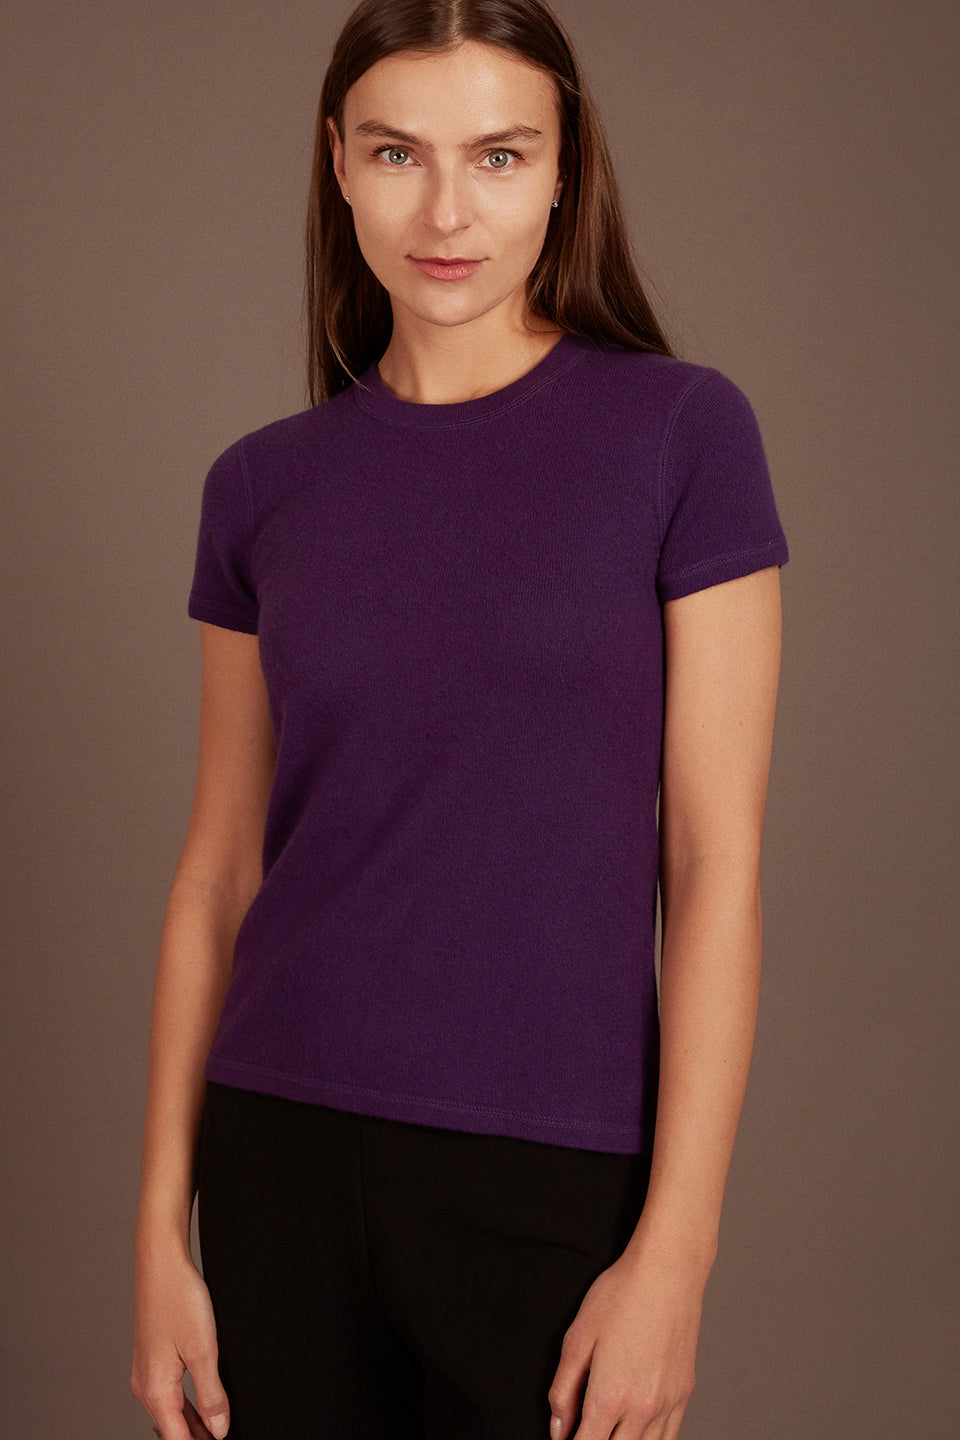 HENRI BENDEL <br> Cashmere Purple Sweater <br> Size M